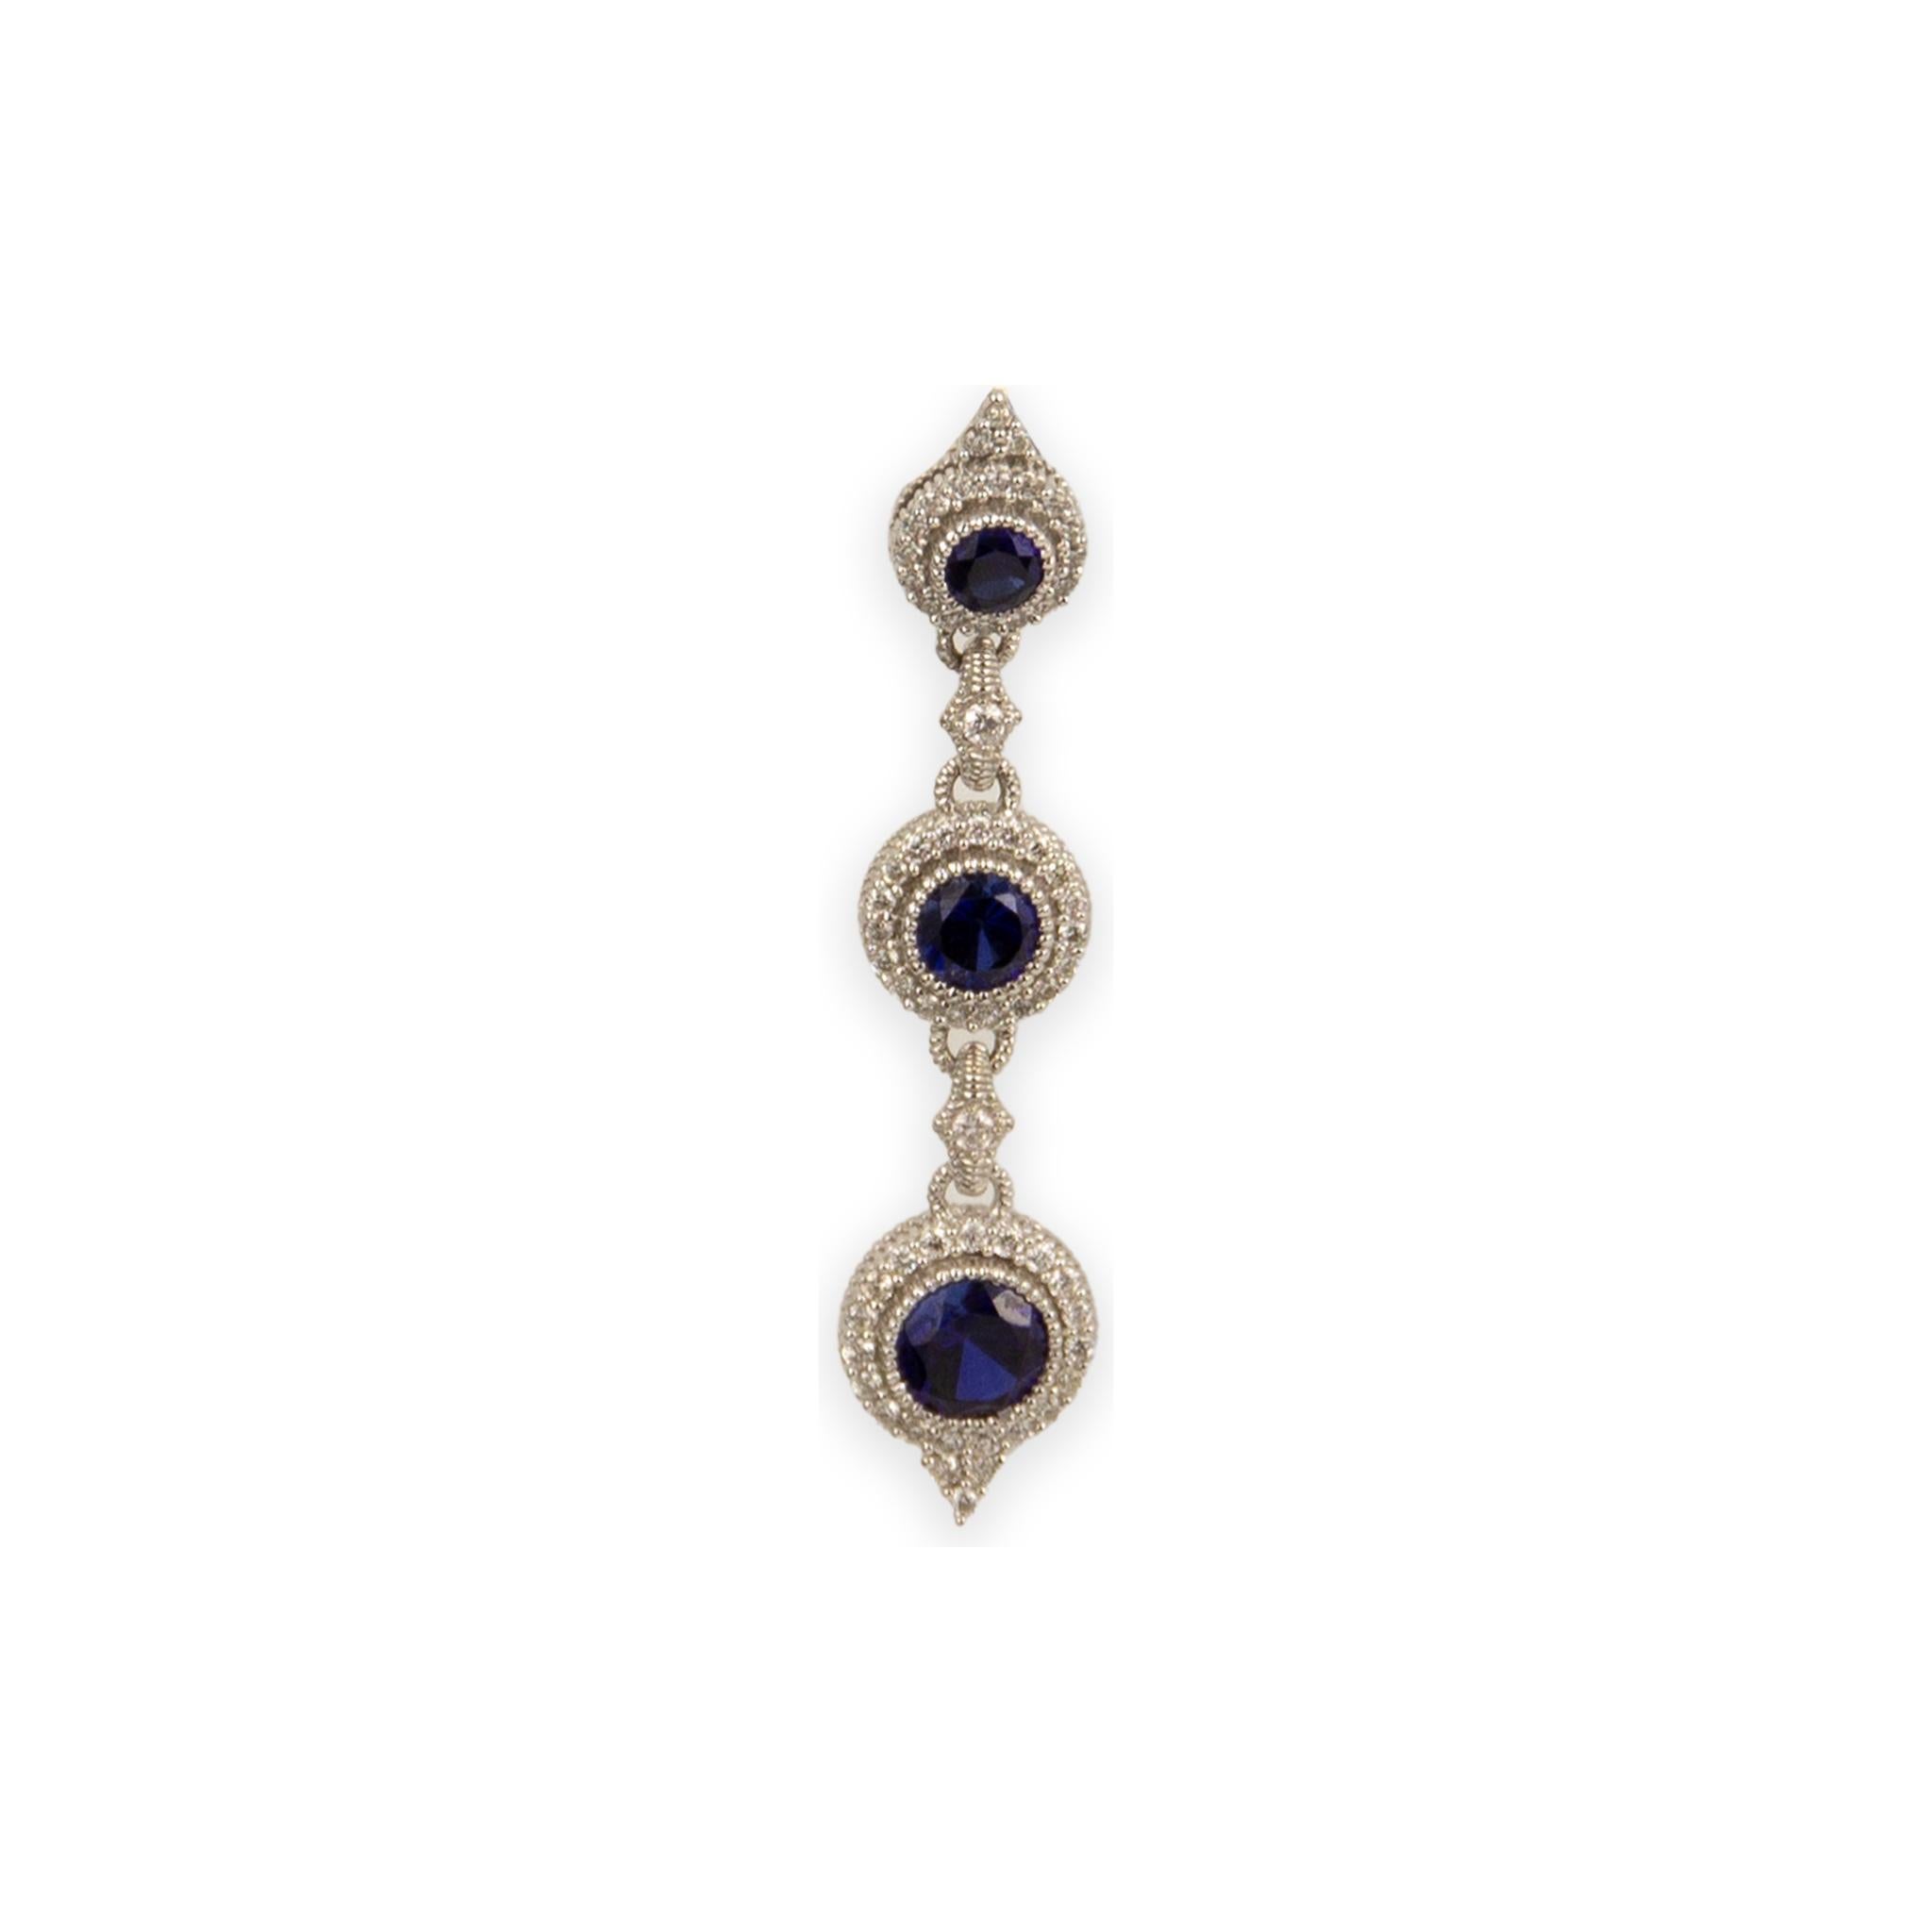 Judith Ripka 18K White Gold Earrings
Diamond and Sapphire
Diamonds: 0.71ctw
Sapphire: 12.73ctw
SKU: JR01054
Retail price: $5,520.00